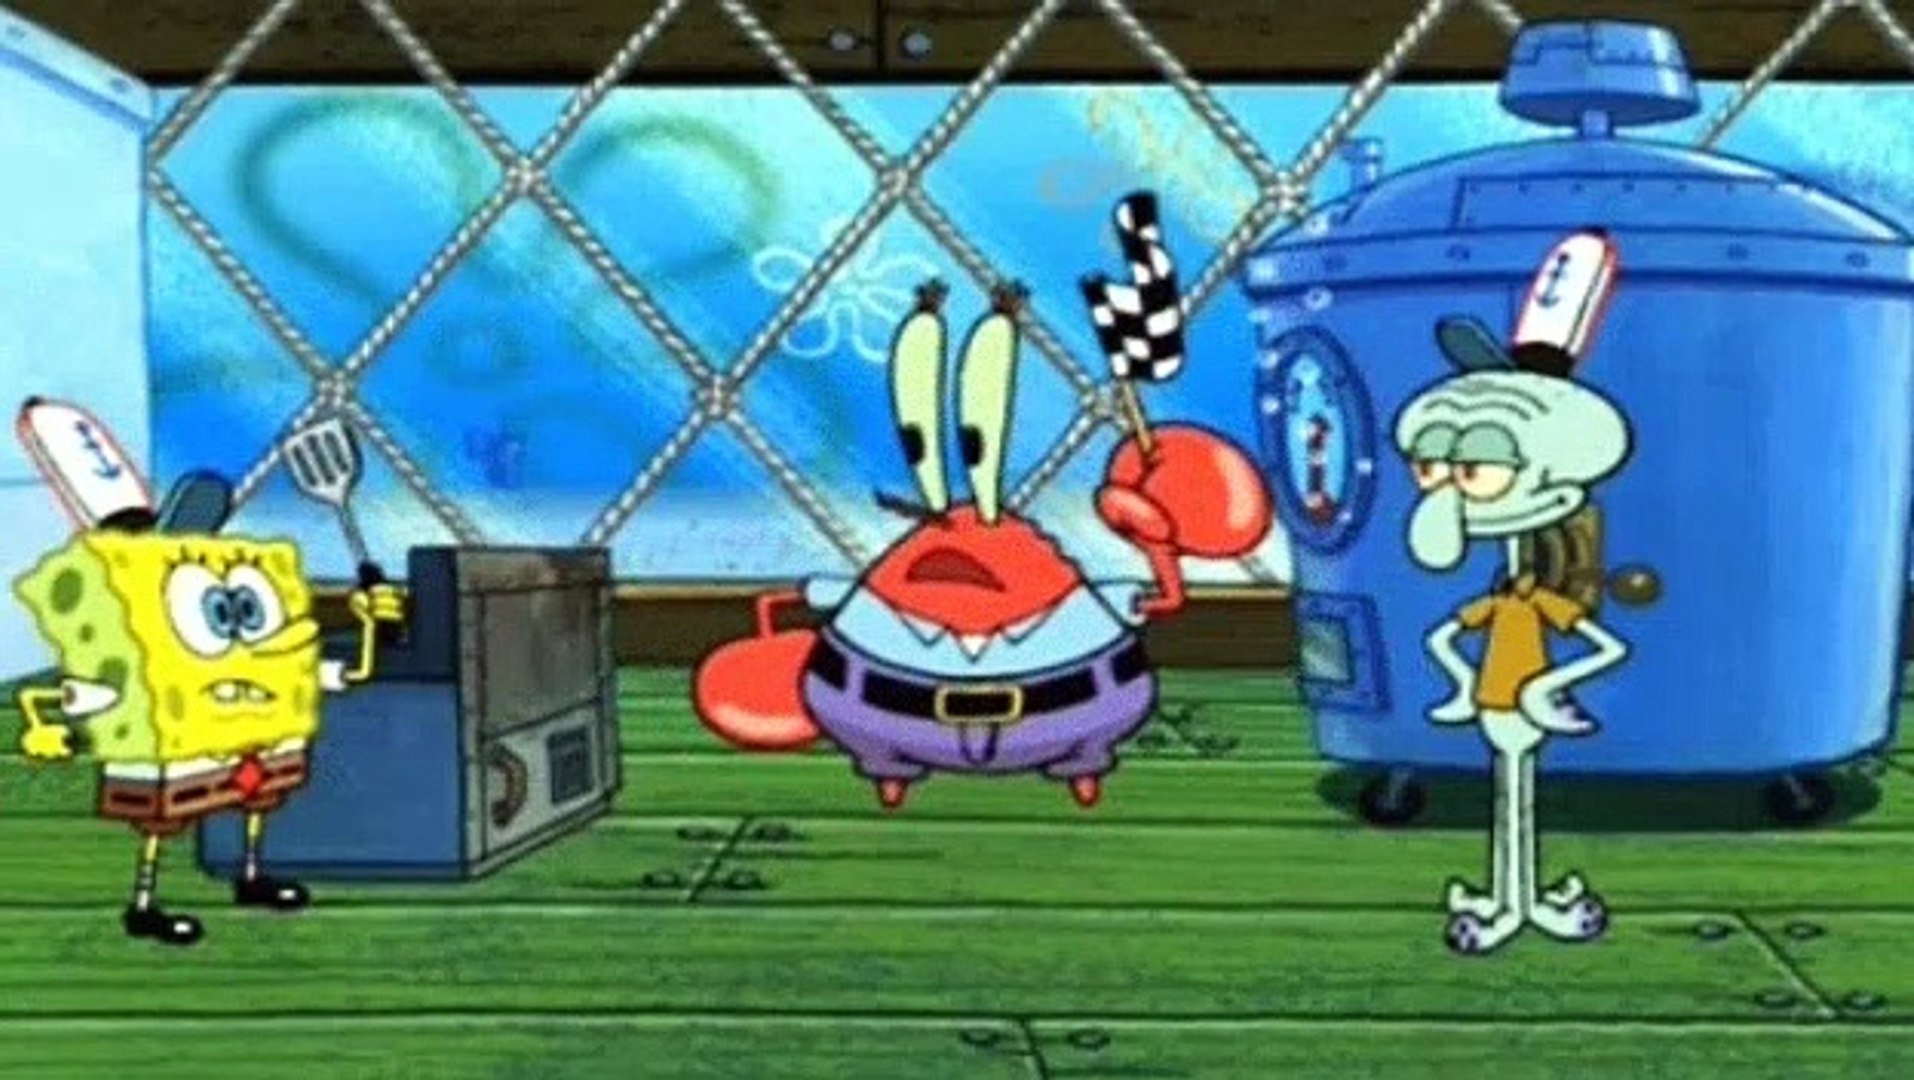 Sponge Bob S05E10b - Spongebob vs. The Patty Gadget - video